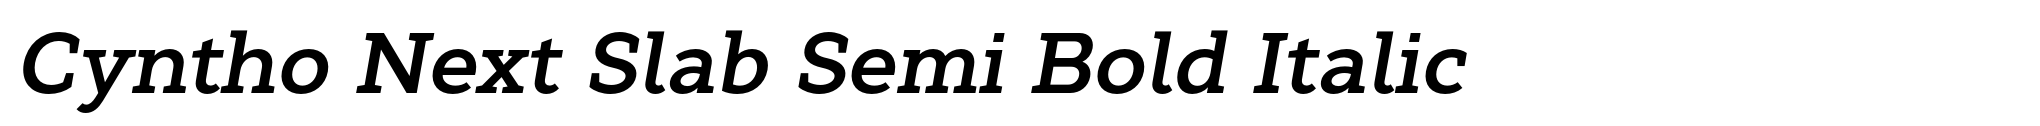 Cyntho Next Slab Semi Bold Italic image